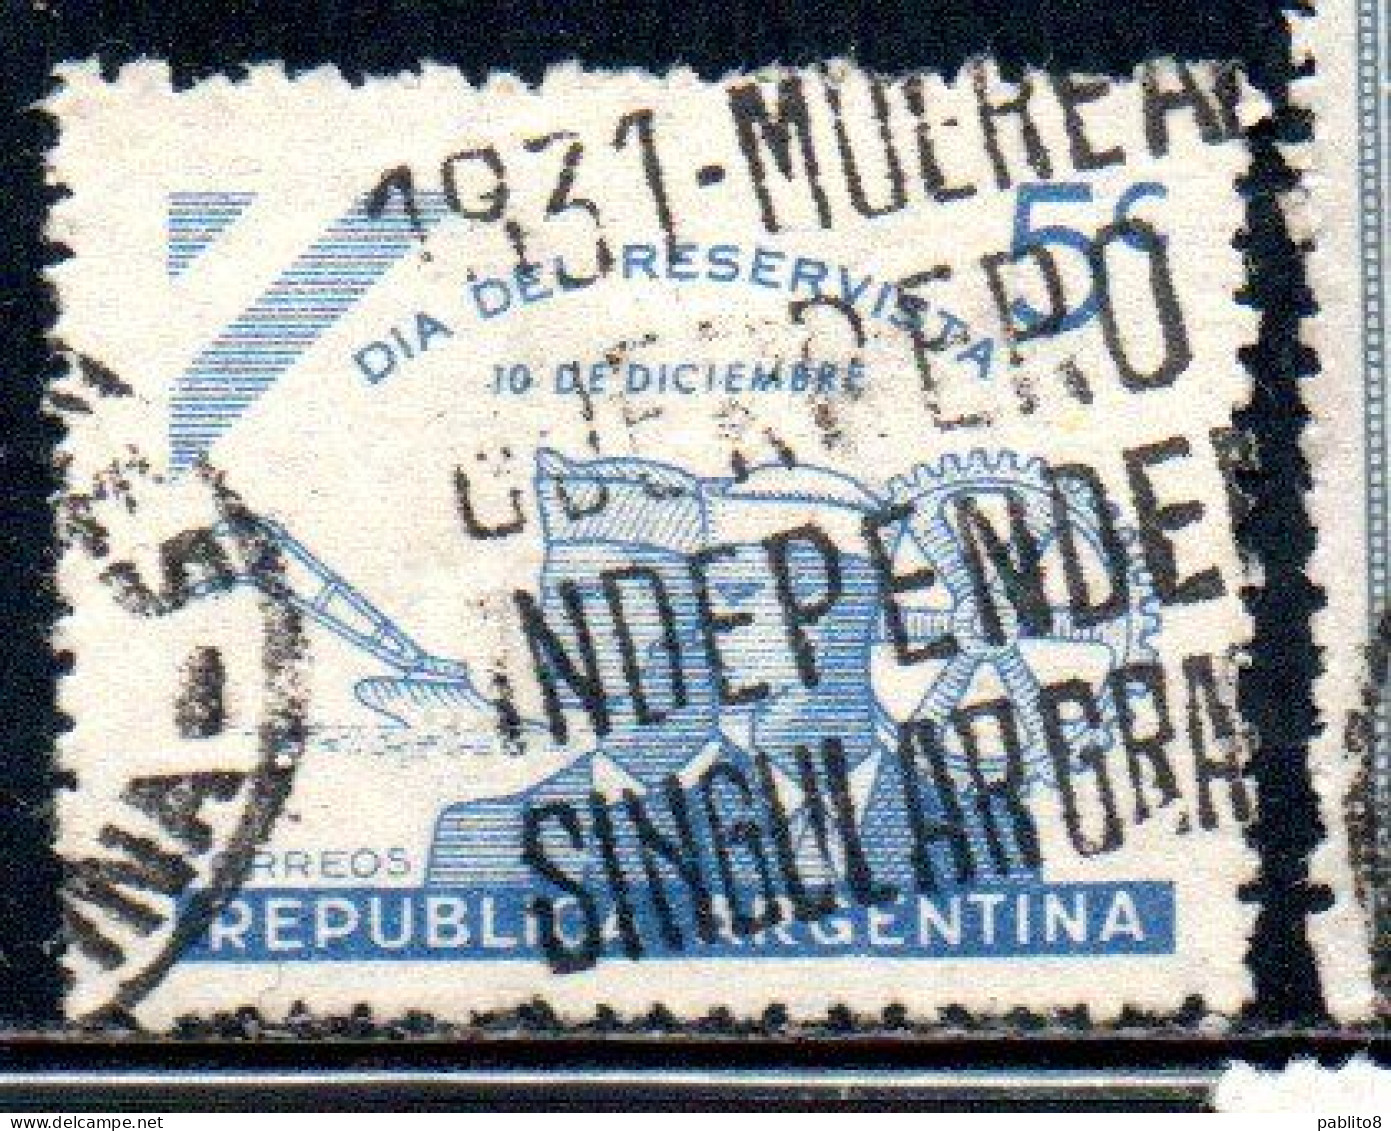 ARGENTINA 1944 DAY OF RESERVISTS 5c USED USADO OBLITERE' - Gebruikt